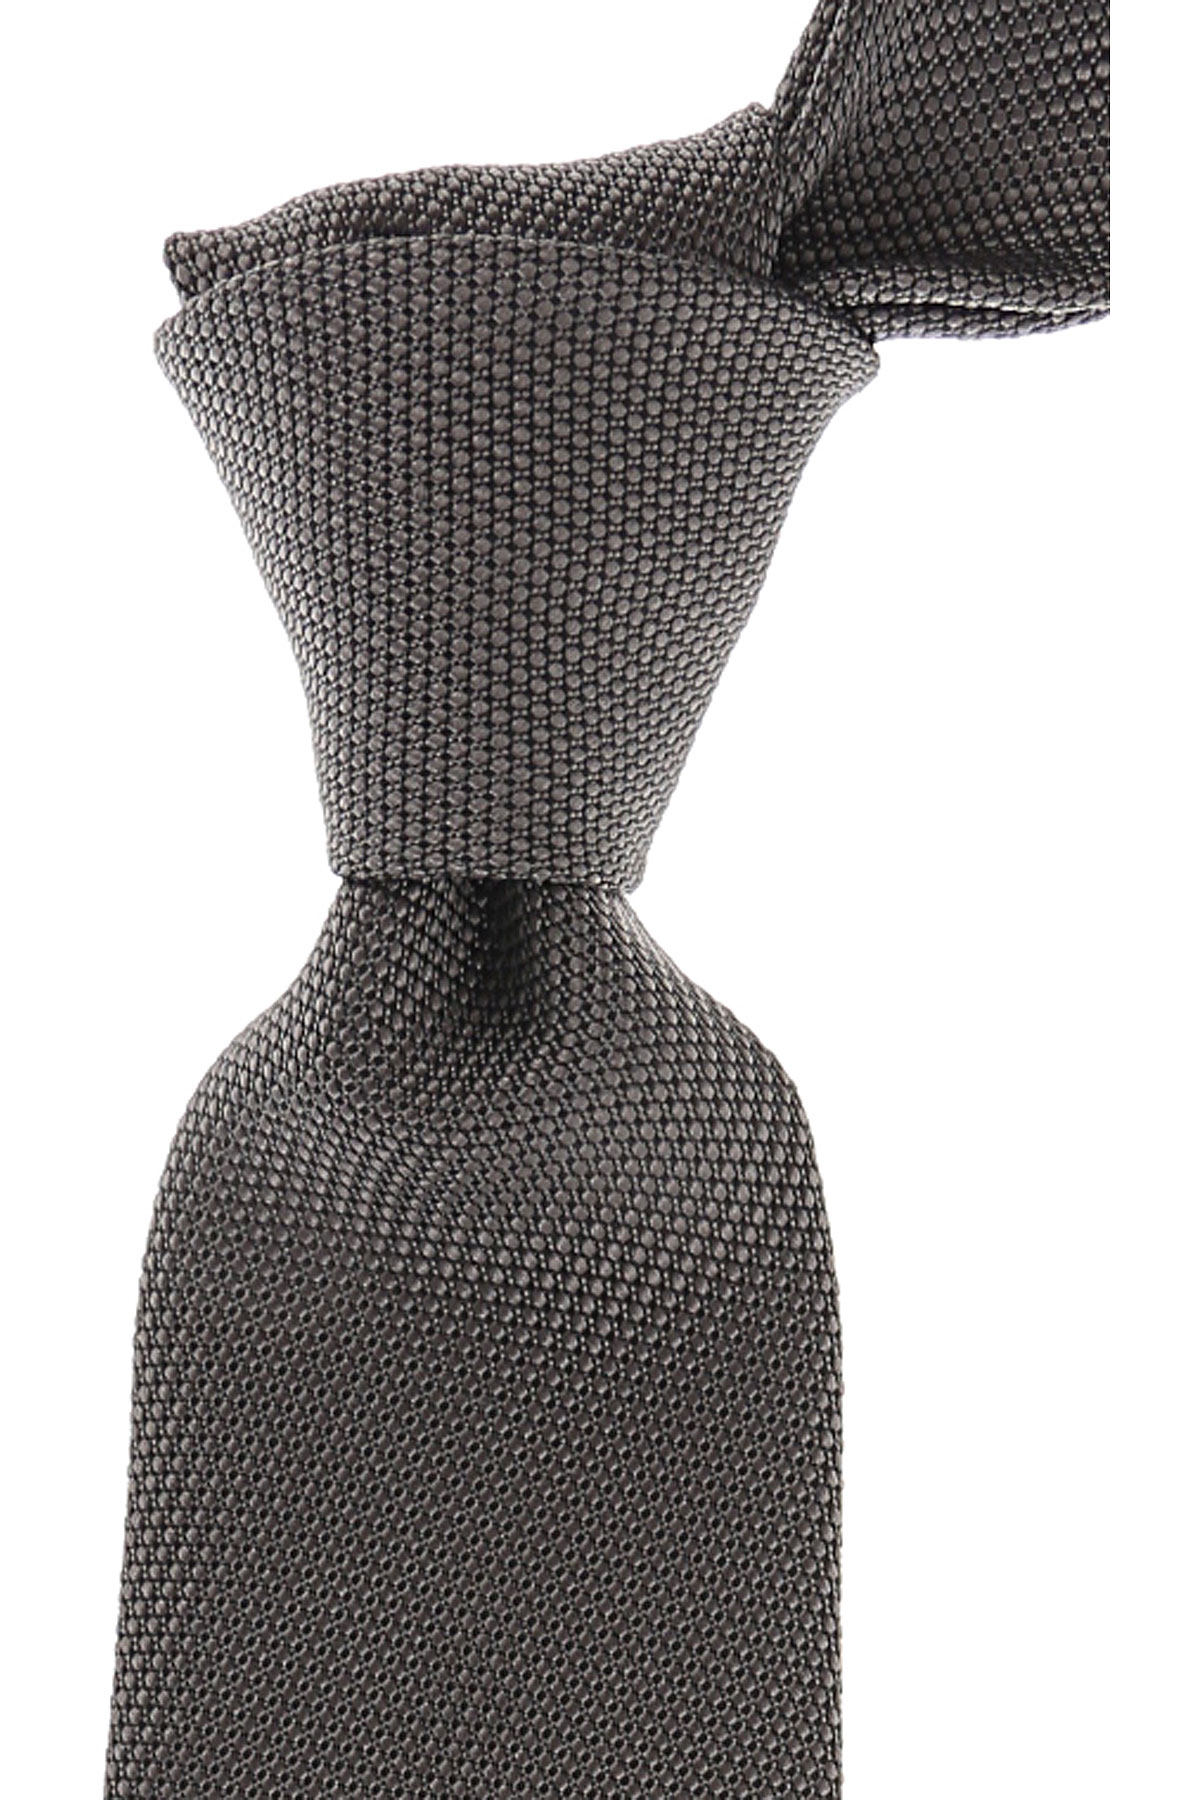 Cravates Valentino , Graphite, Soie, 2017